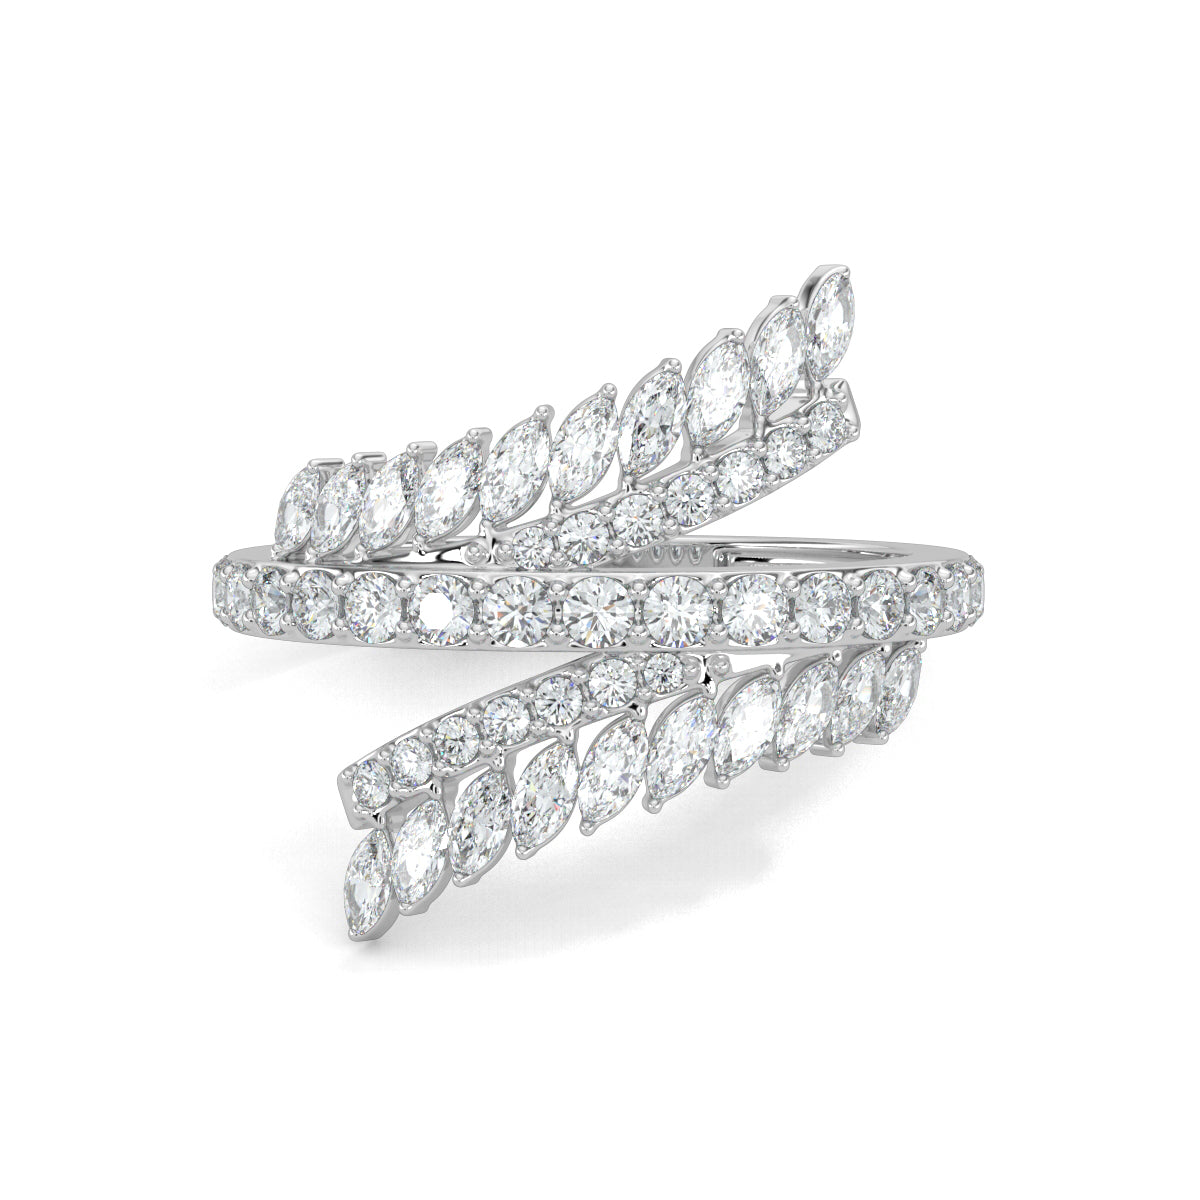 White Gold, Diamond Ring, Natural Diamond ring, Lab-grown diamond ring, Dazzle Curve Ring, open-end diamond band, round and marquise-cut diamonds, sparkling diamond jewelry, elegant diamond accessory.